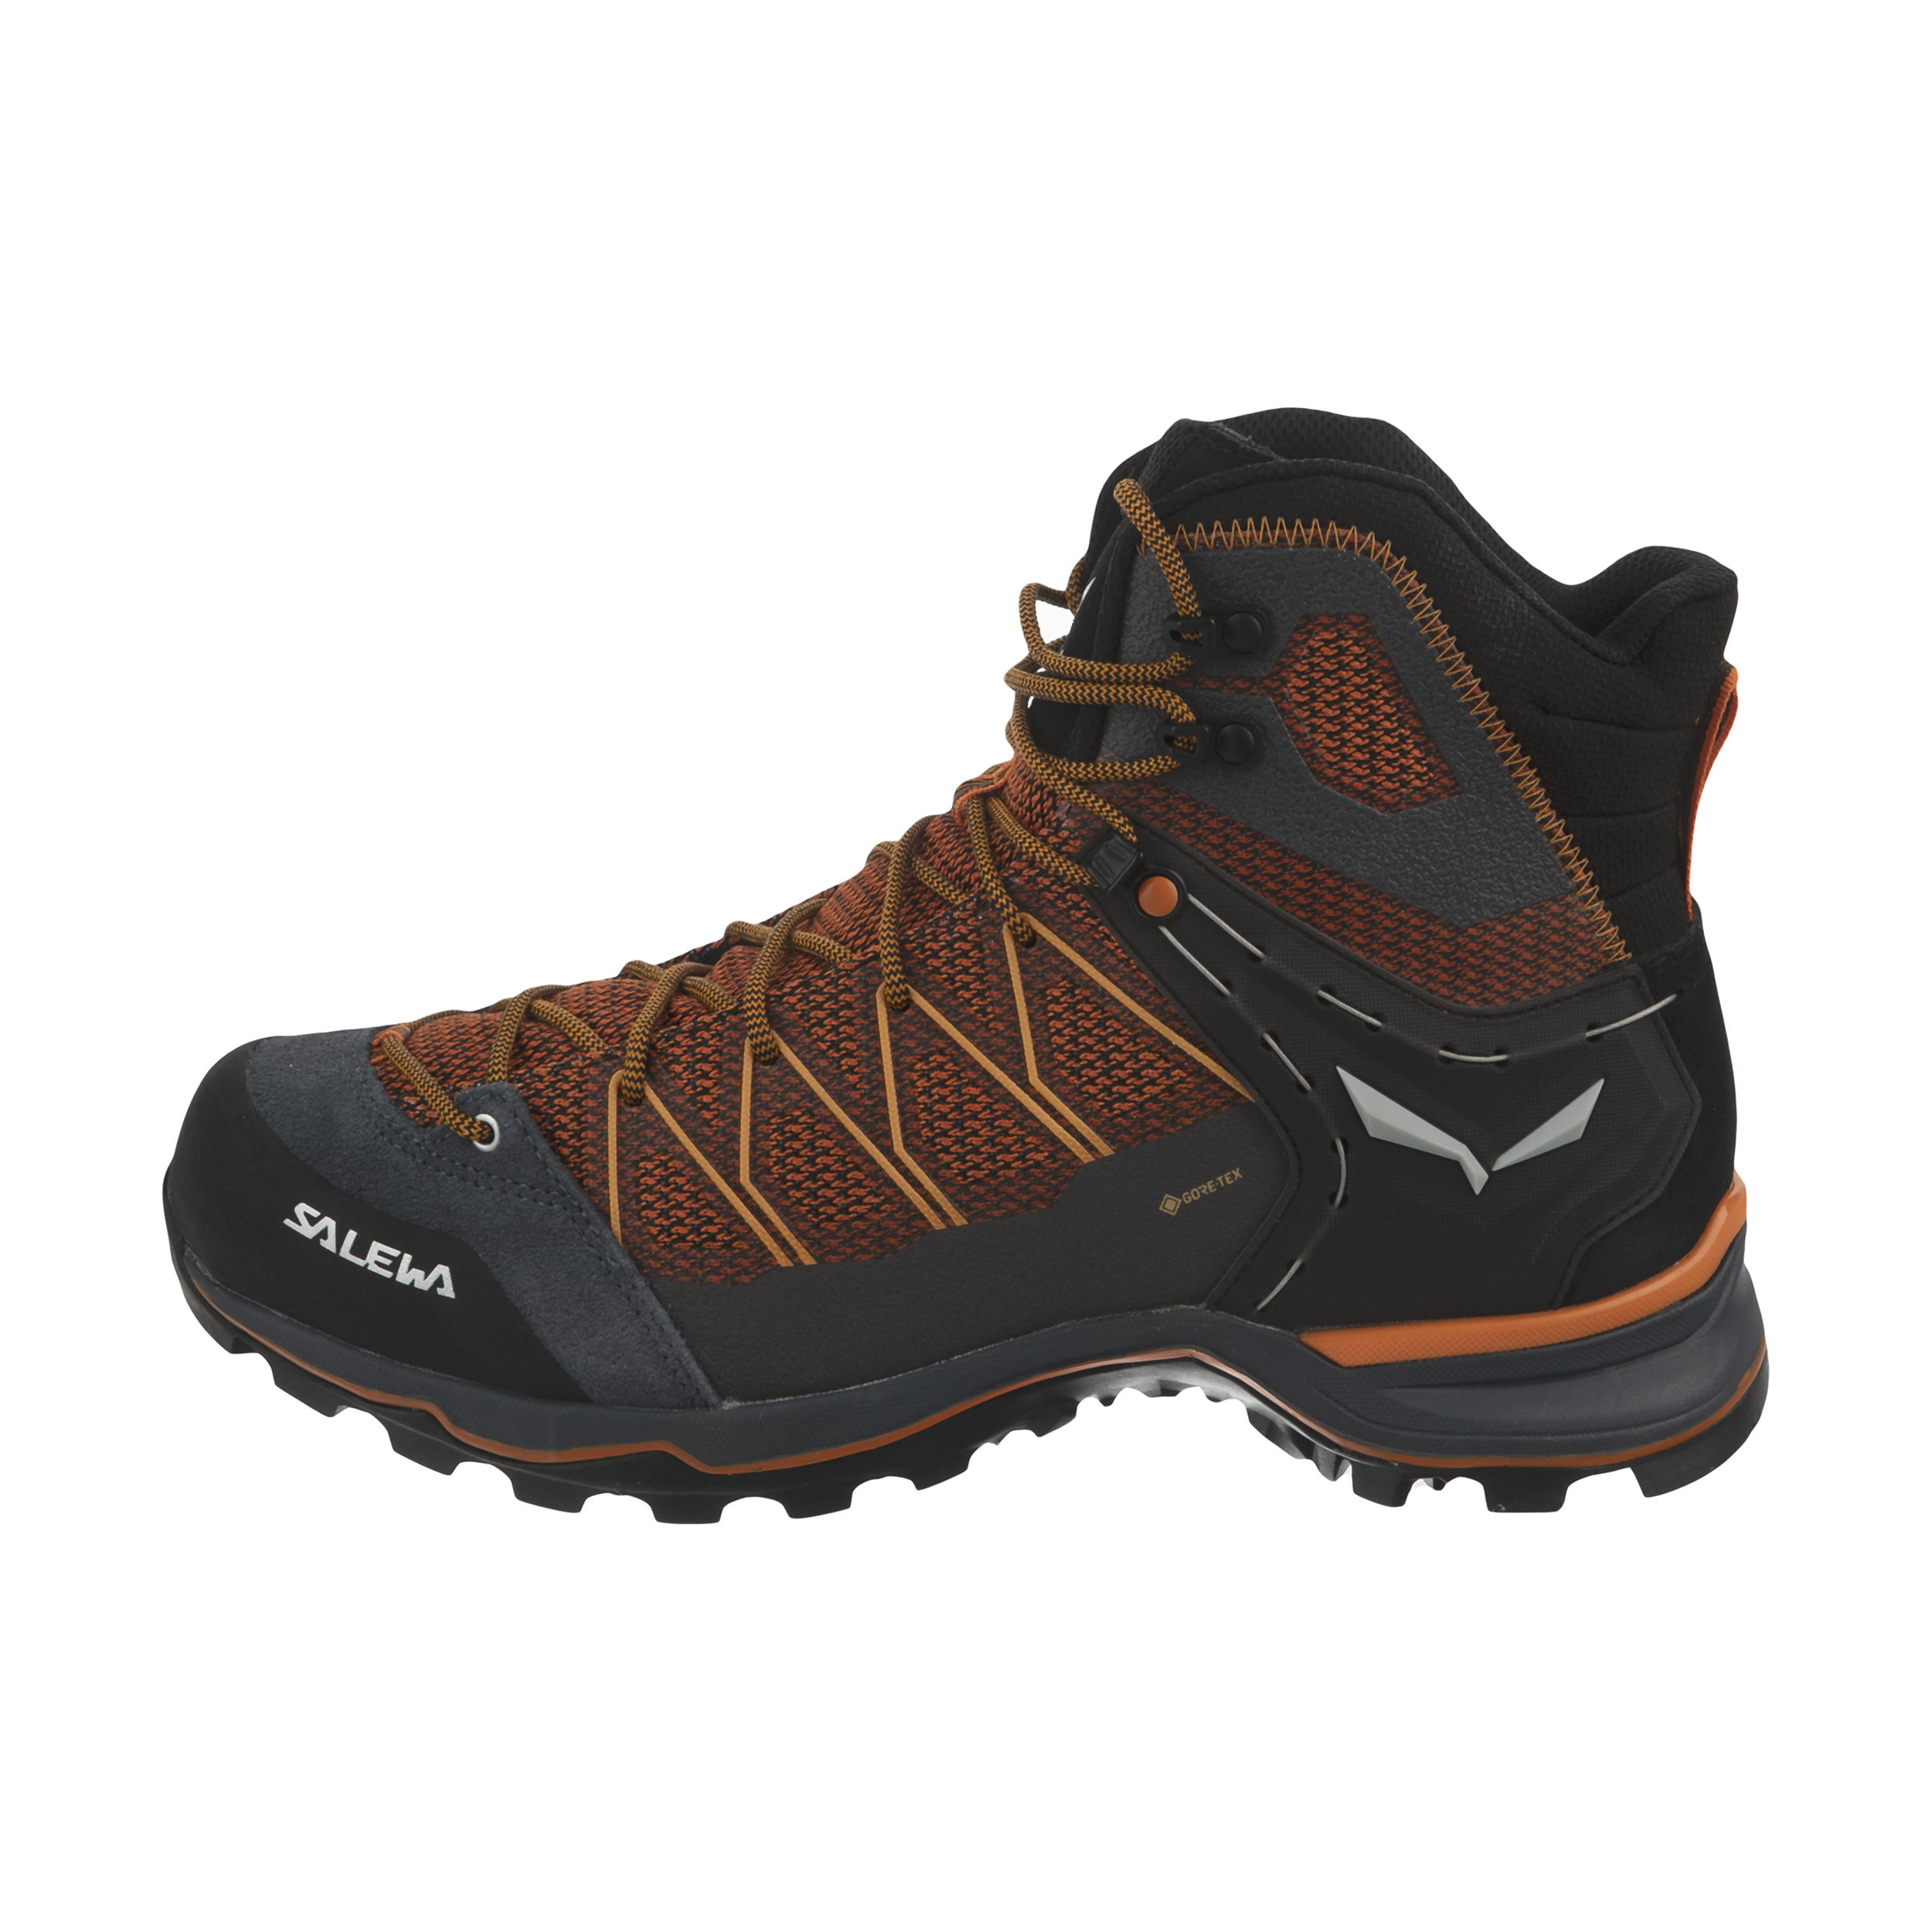 نکته خرید - قیمت روز کفش کوهنوردی مردانه سالیوا مدل BLACK OUT خرید